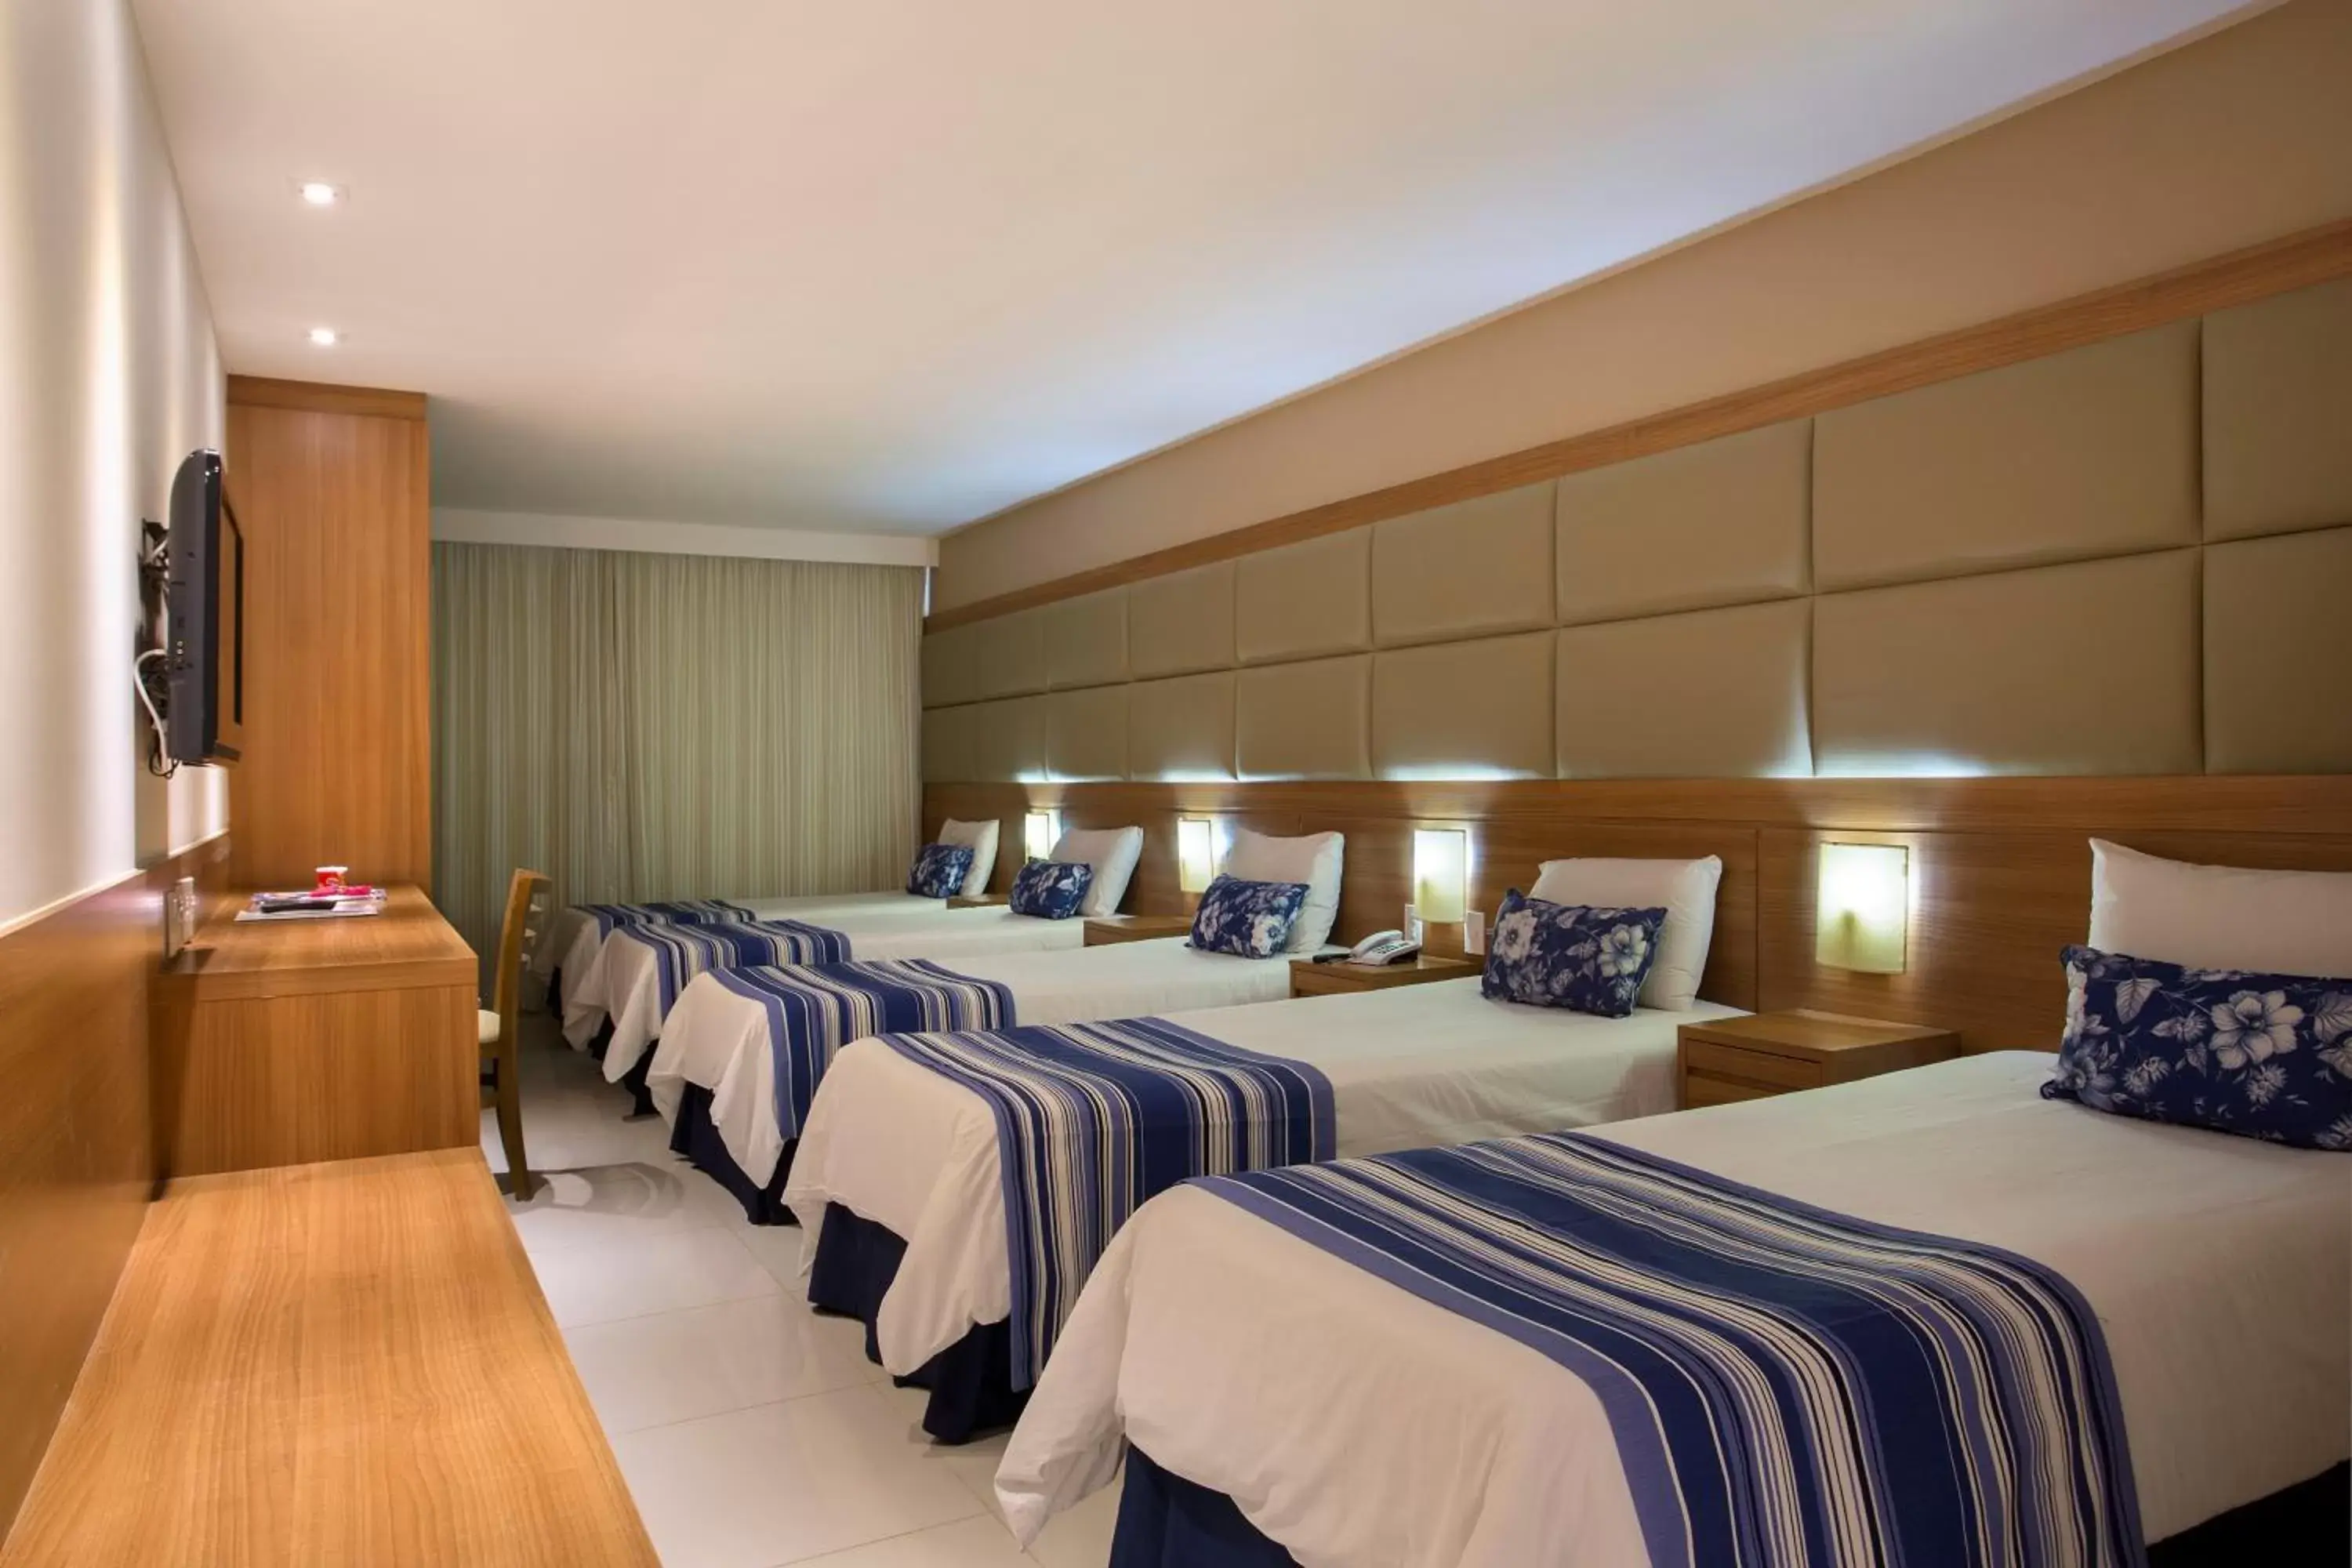 Bed, Room Photo in Hotel Atlantico Praia